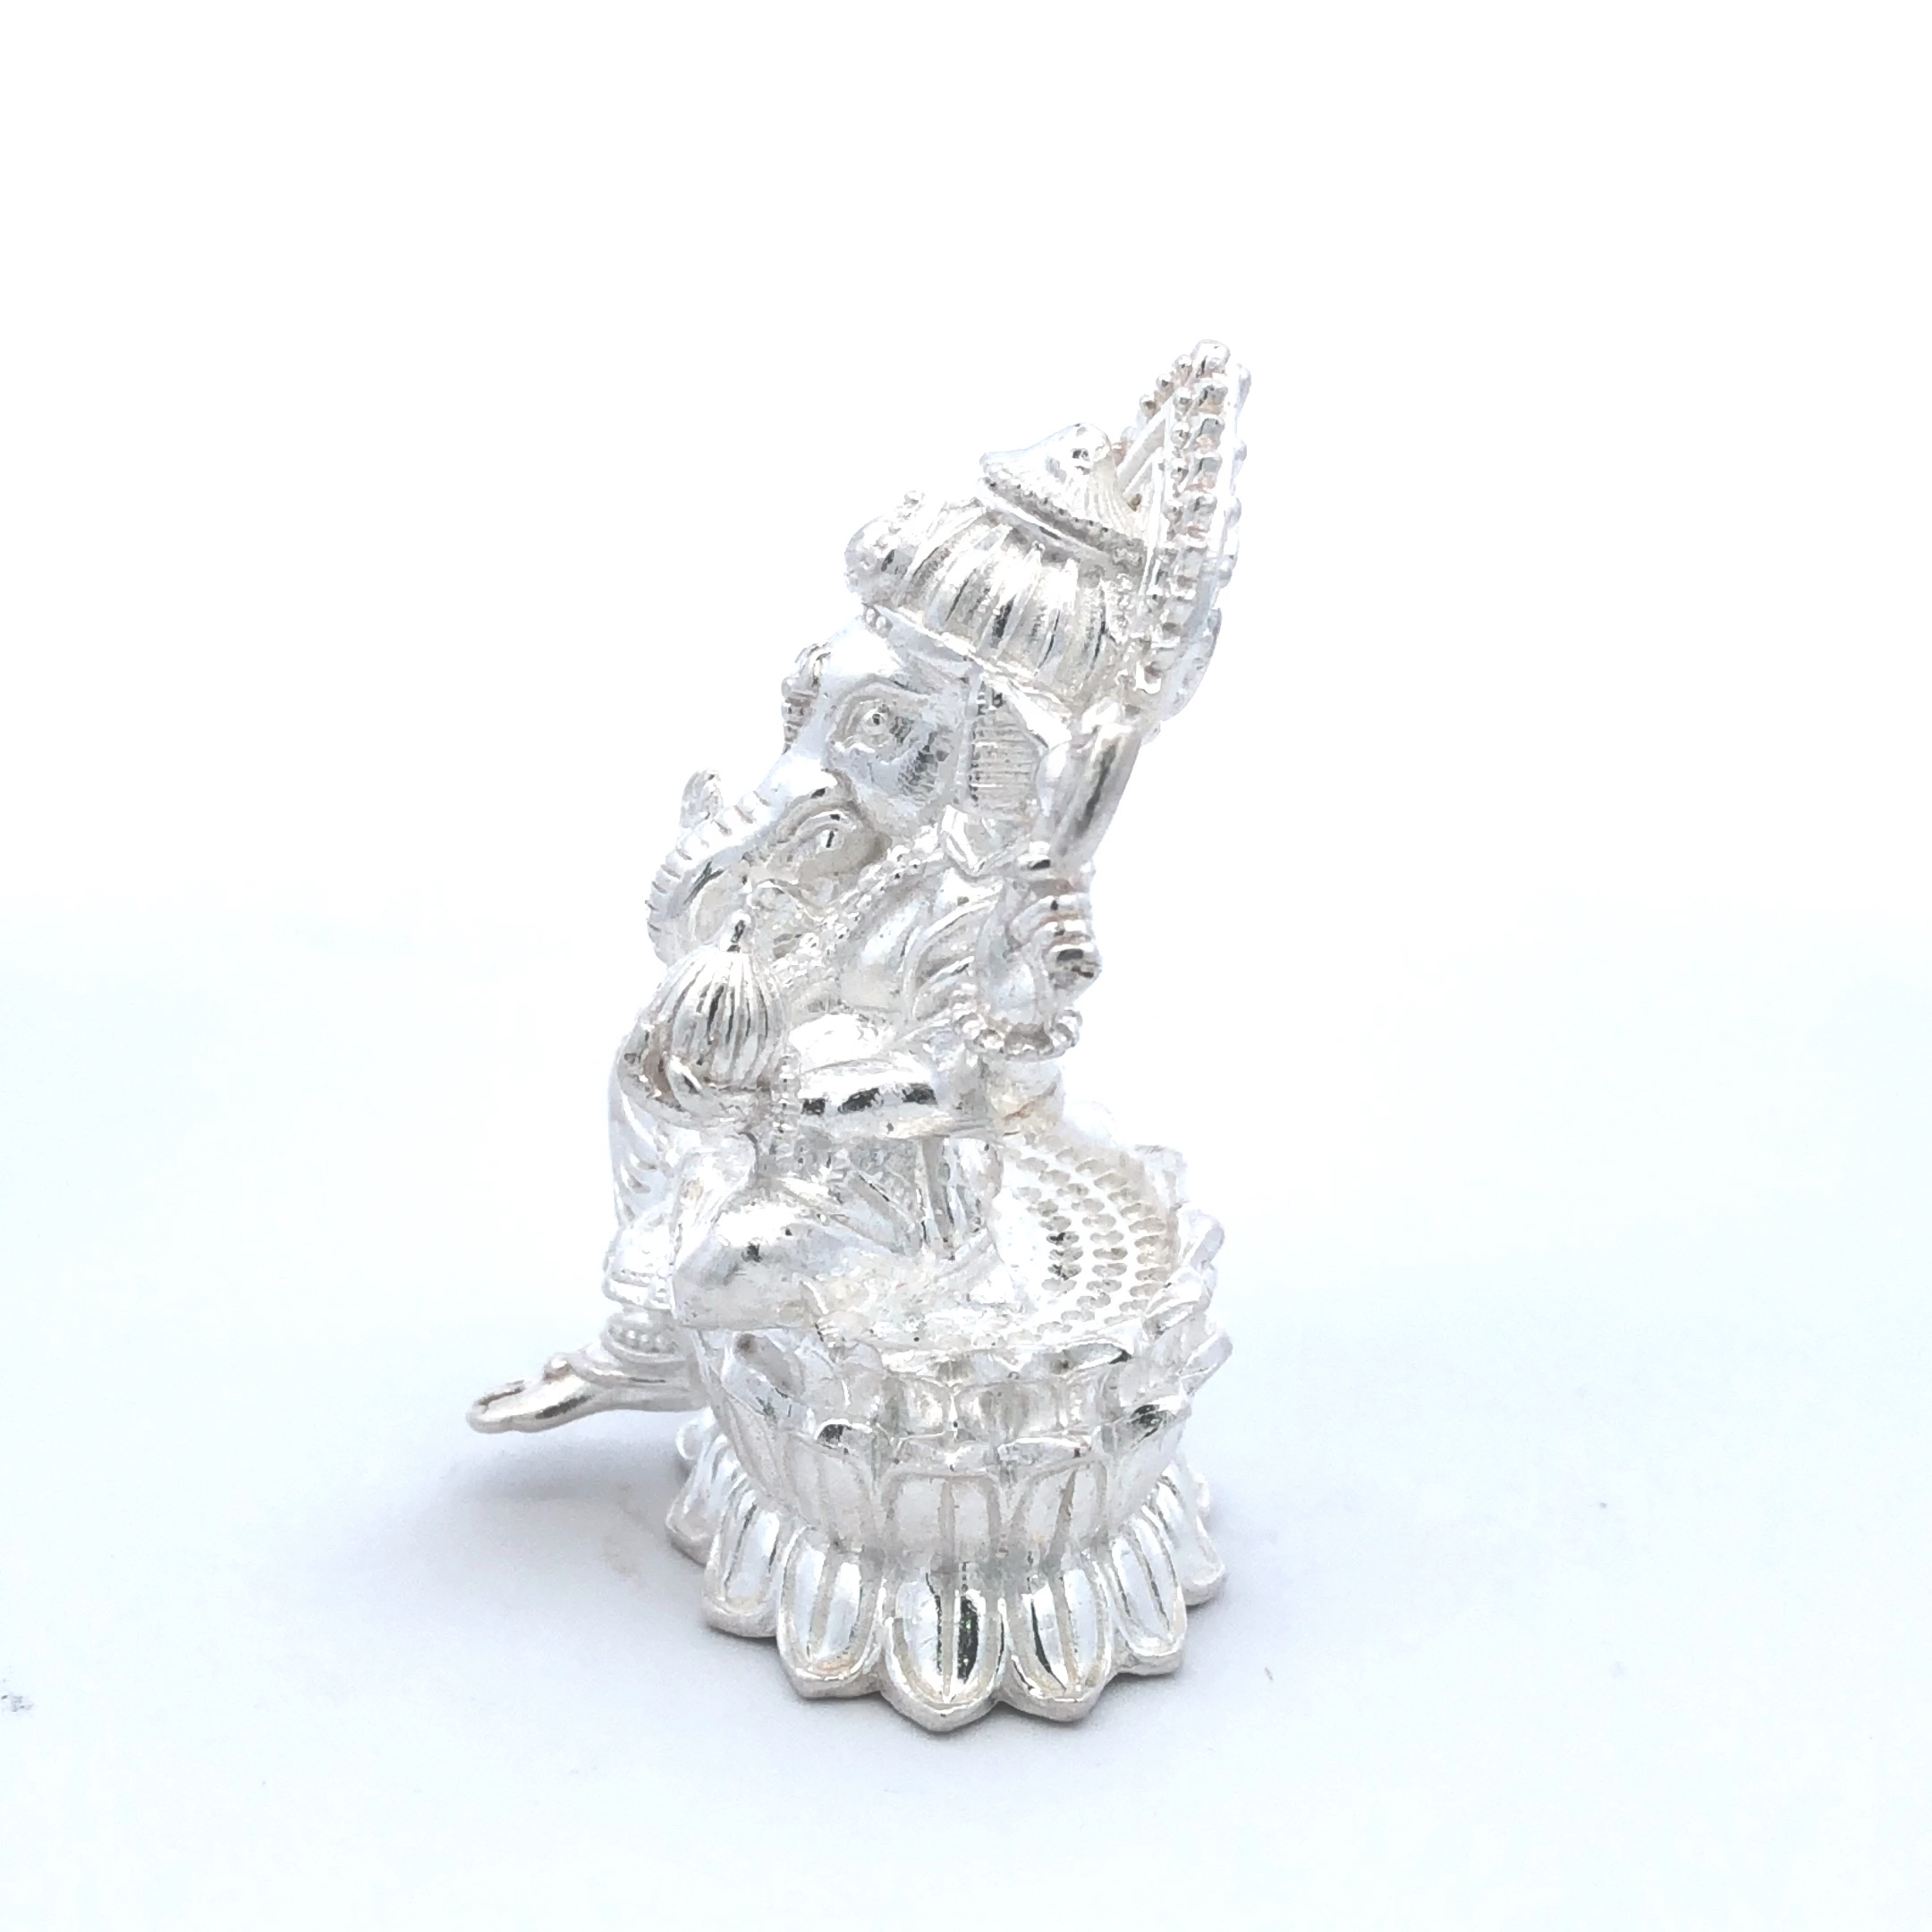 Pure silver ganesh idol for pooja